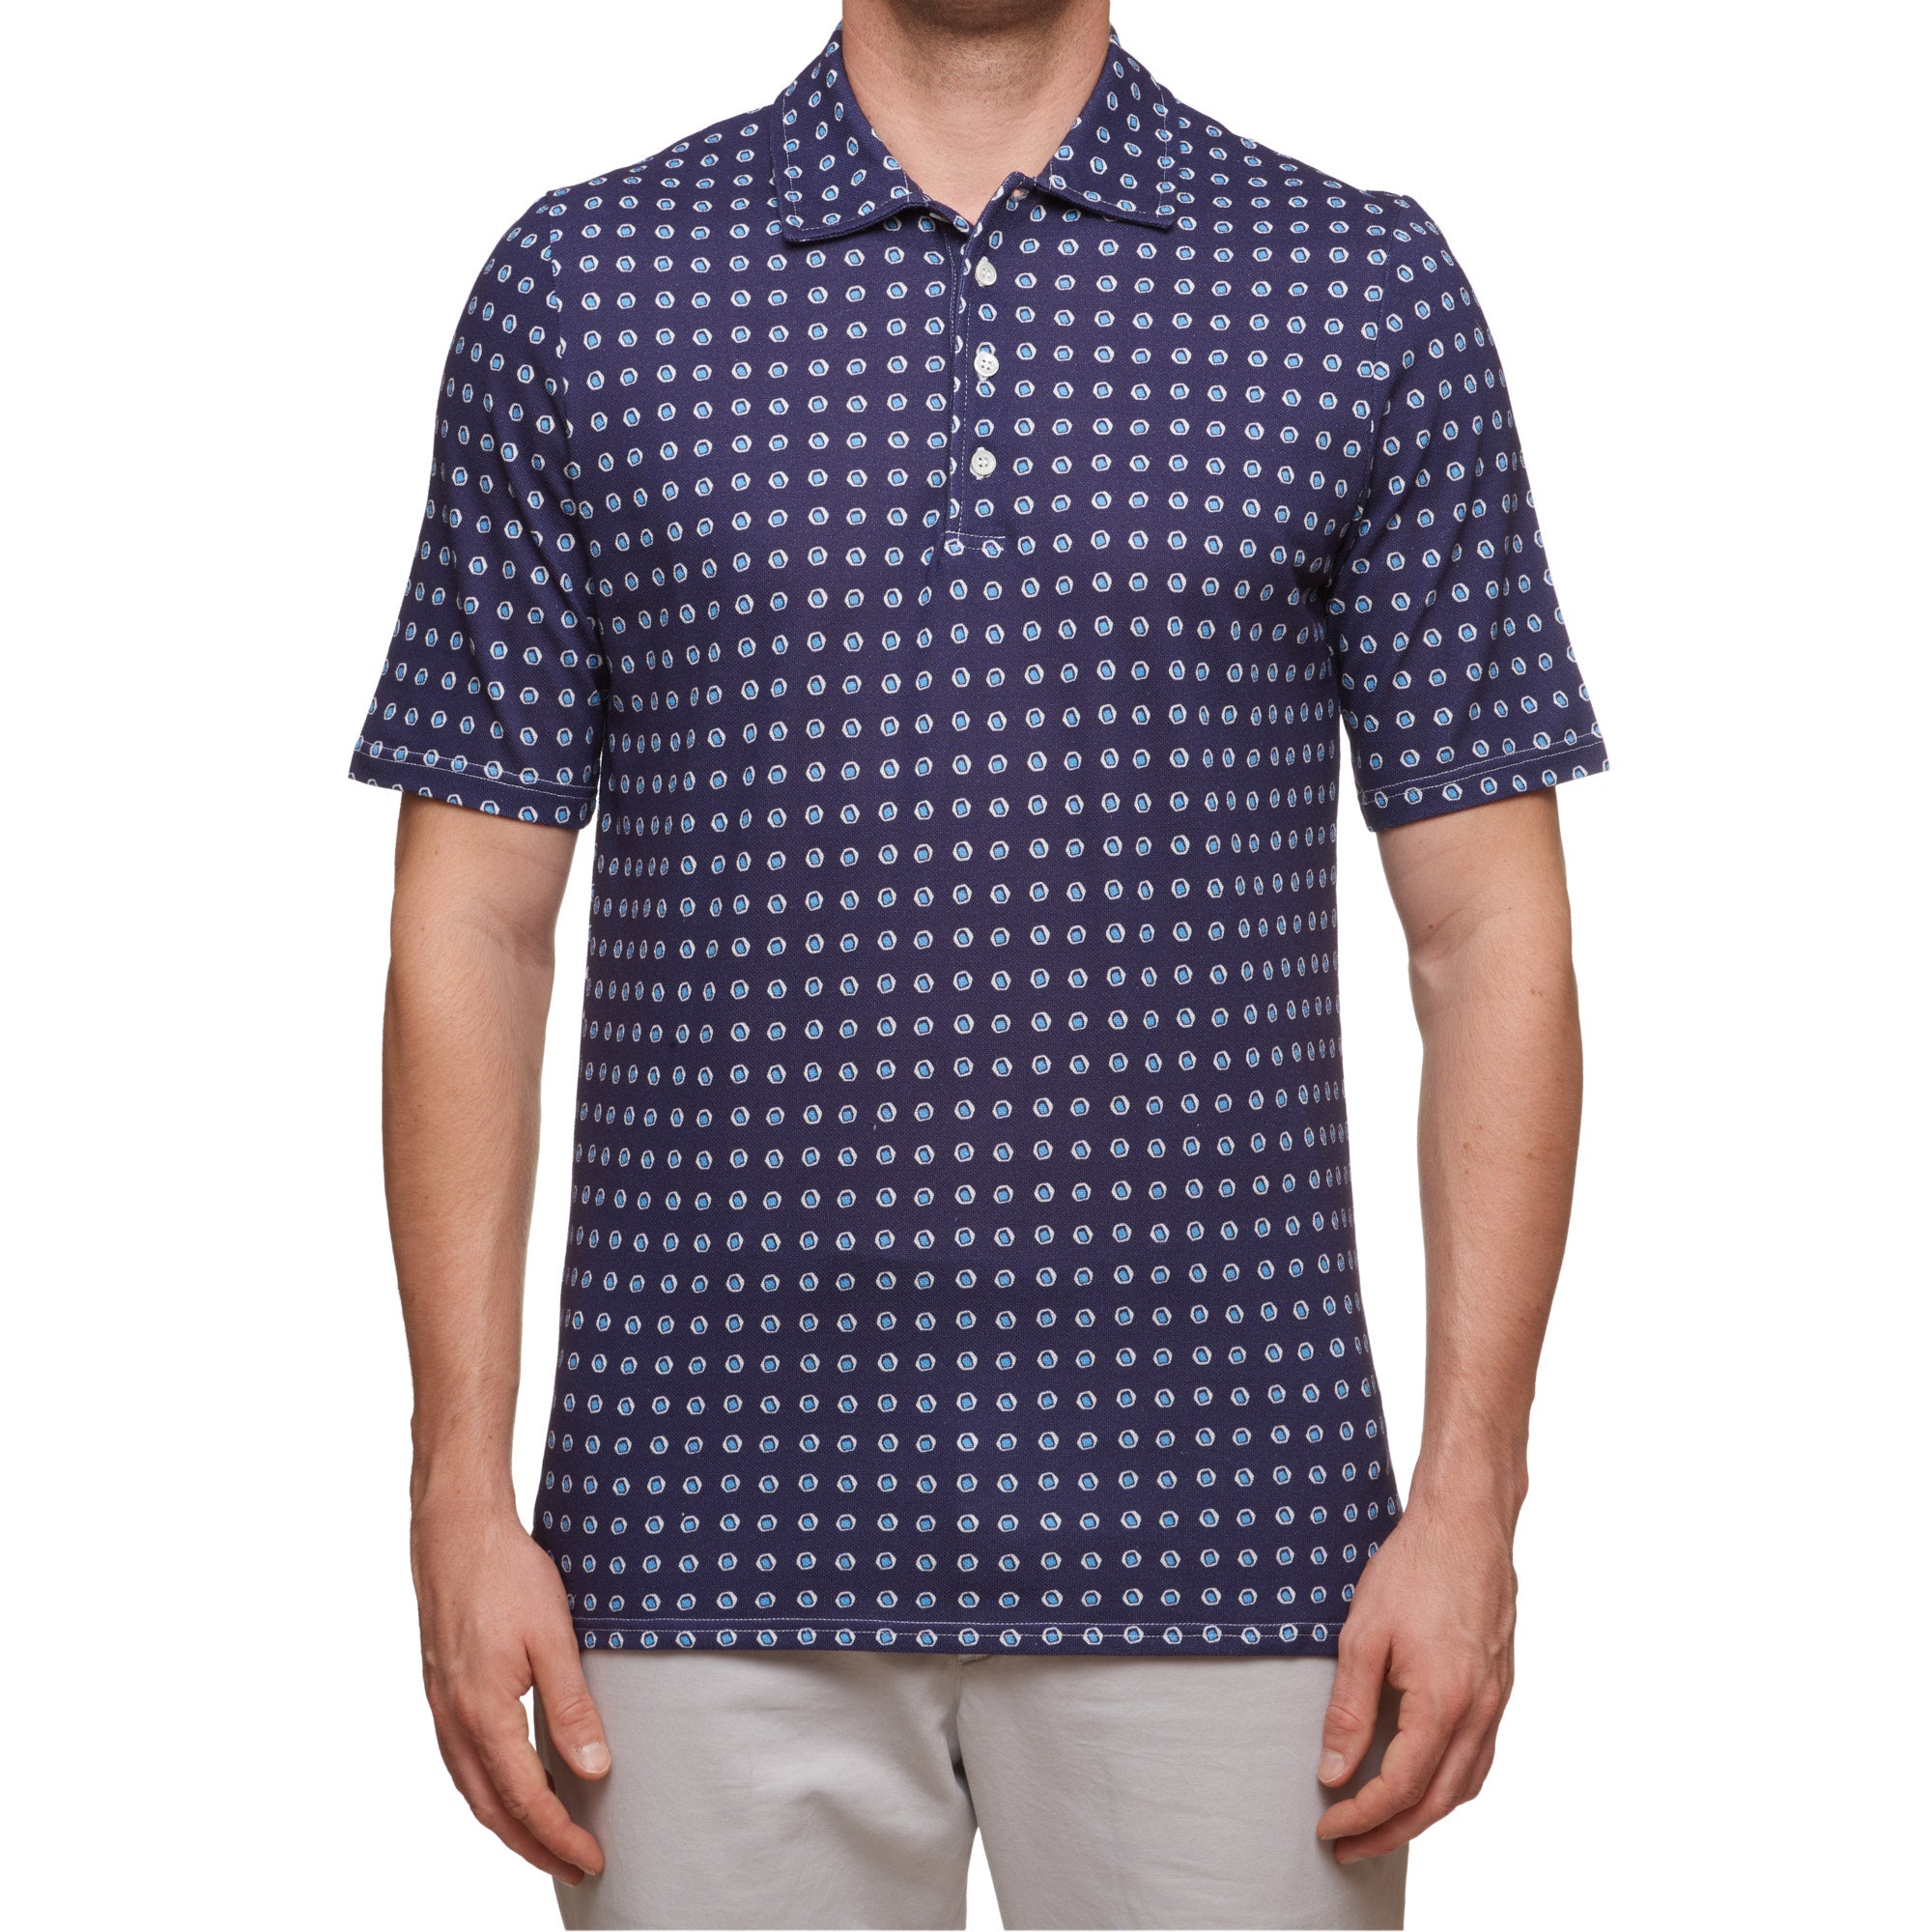 SARTORIO Napoli by KITON Navy Blue Spotted Cotton Pique Short Sleeve Polo Shirt NEW